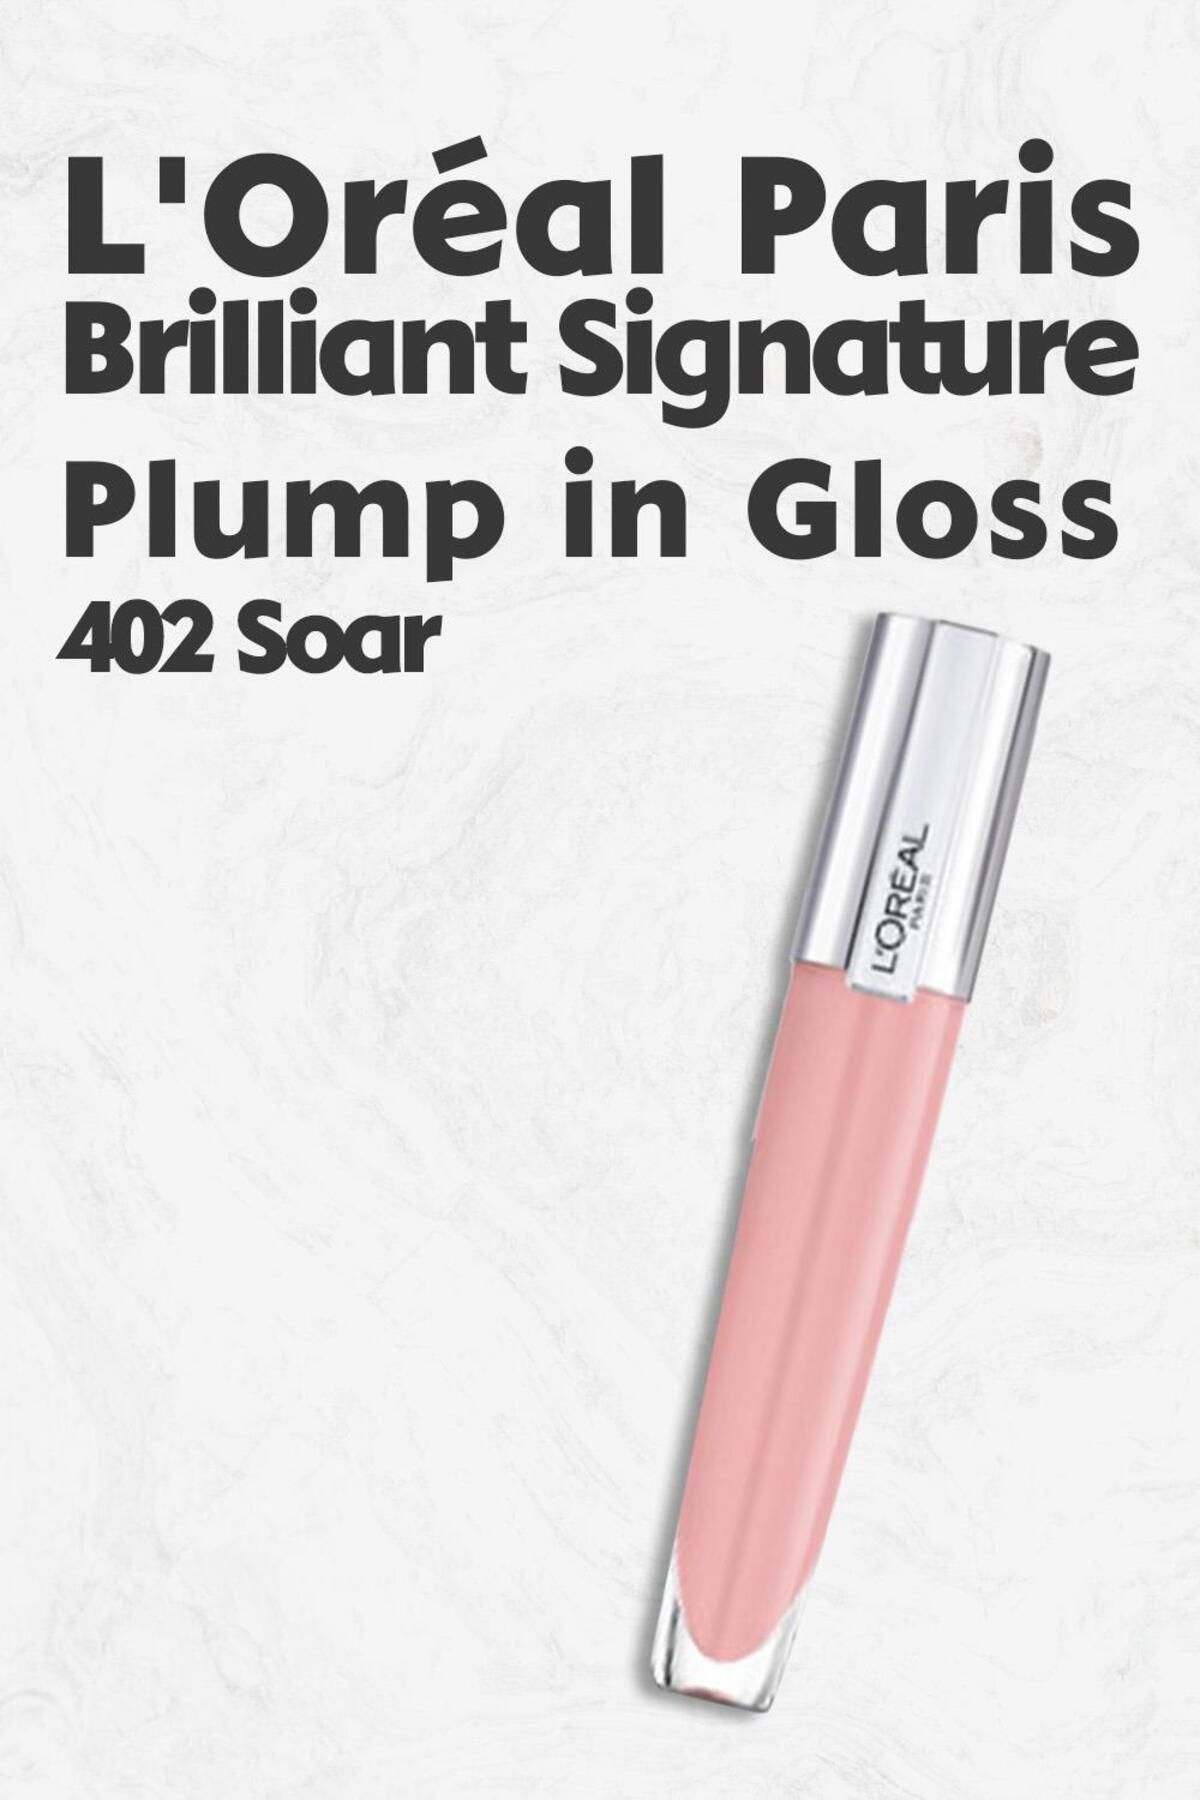 L'Oreal Paris Brilliant Signature Plump in Gloss Ruj 402 Soar